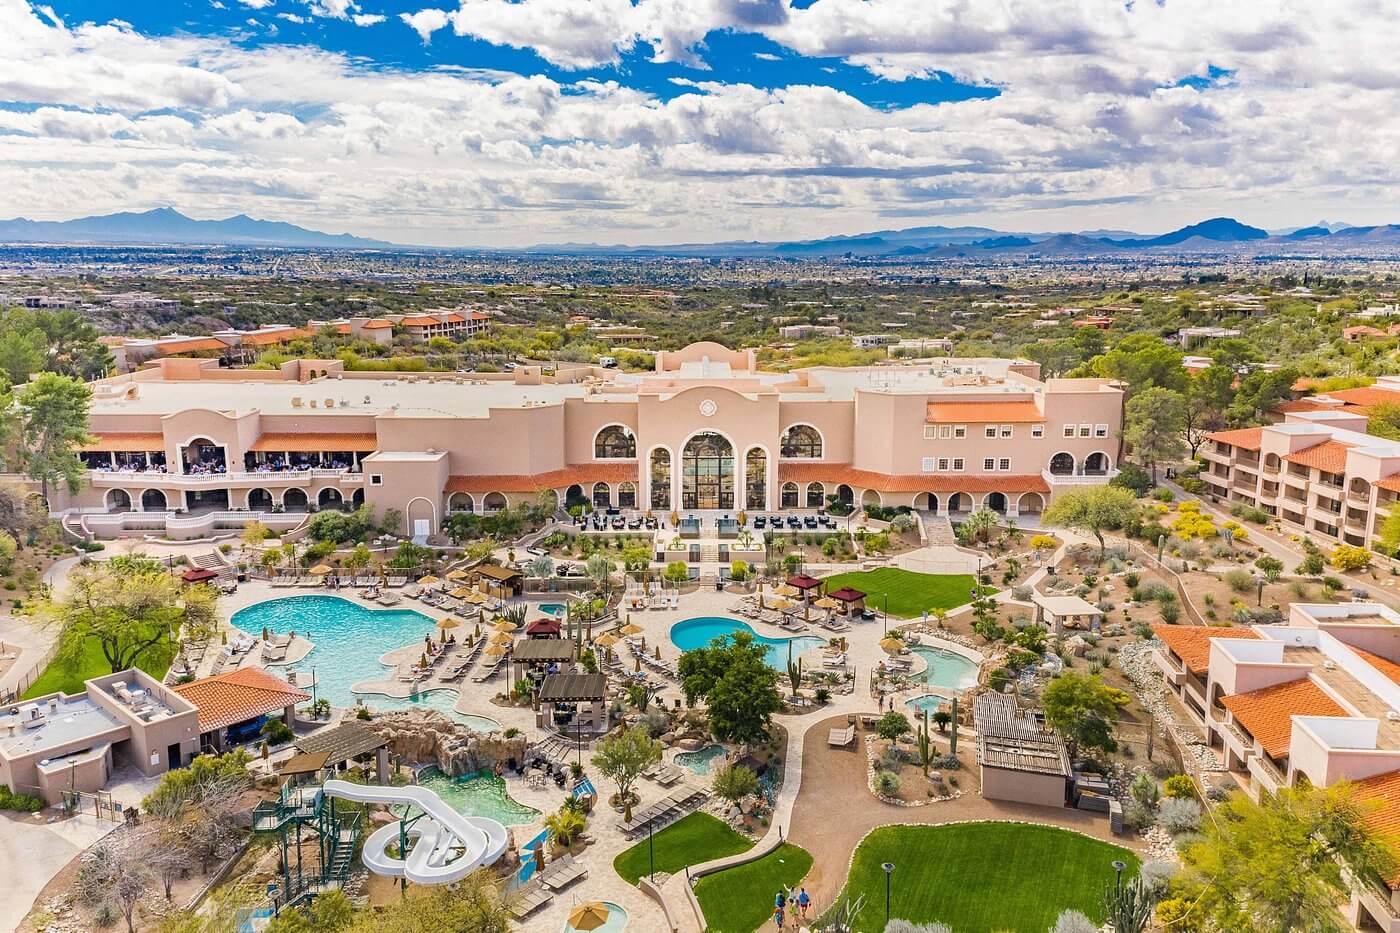 8 Best All-Inclusive Resorts in Arizona